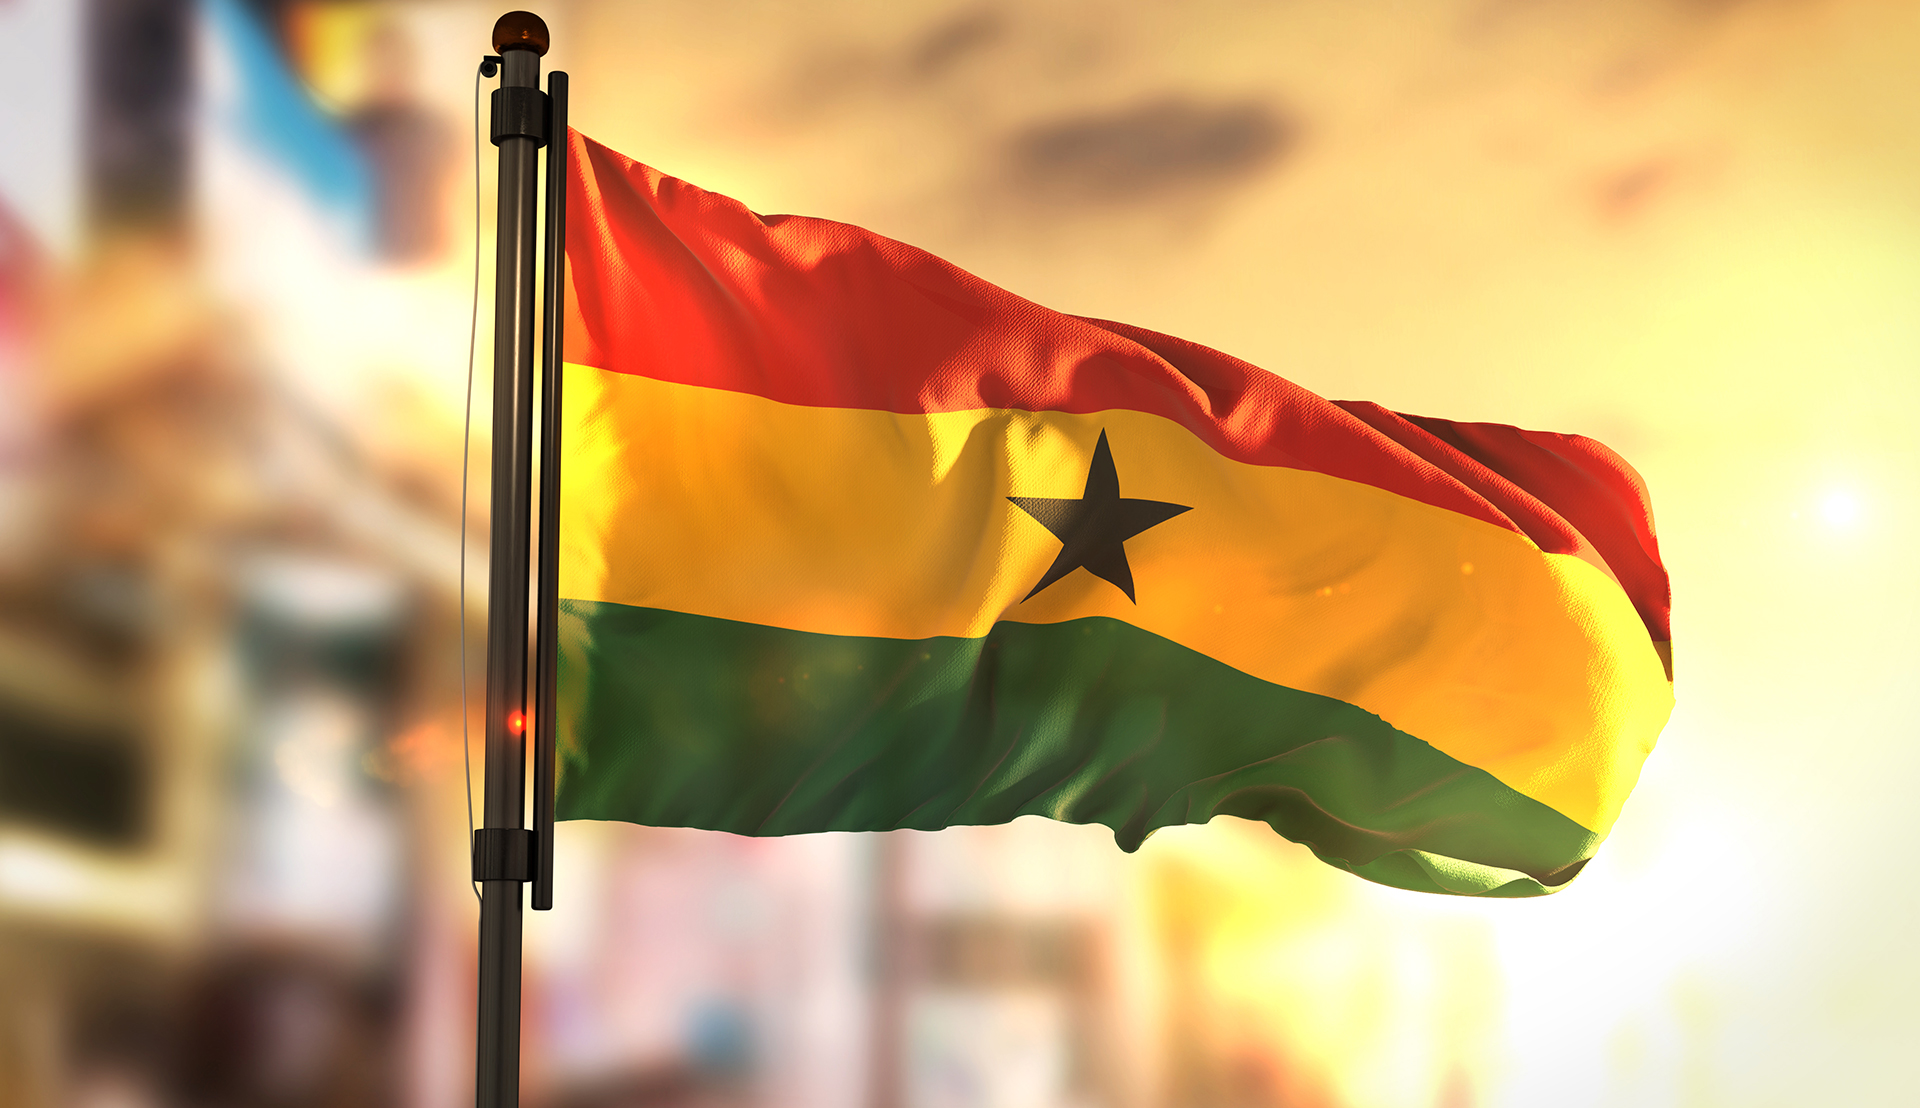 Rutgers Global - The Ghana Job: Opening Socialist Hungary to the  ‘Developing World’, Ghana flag